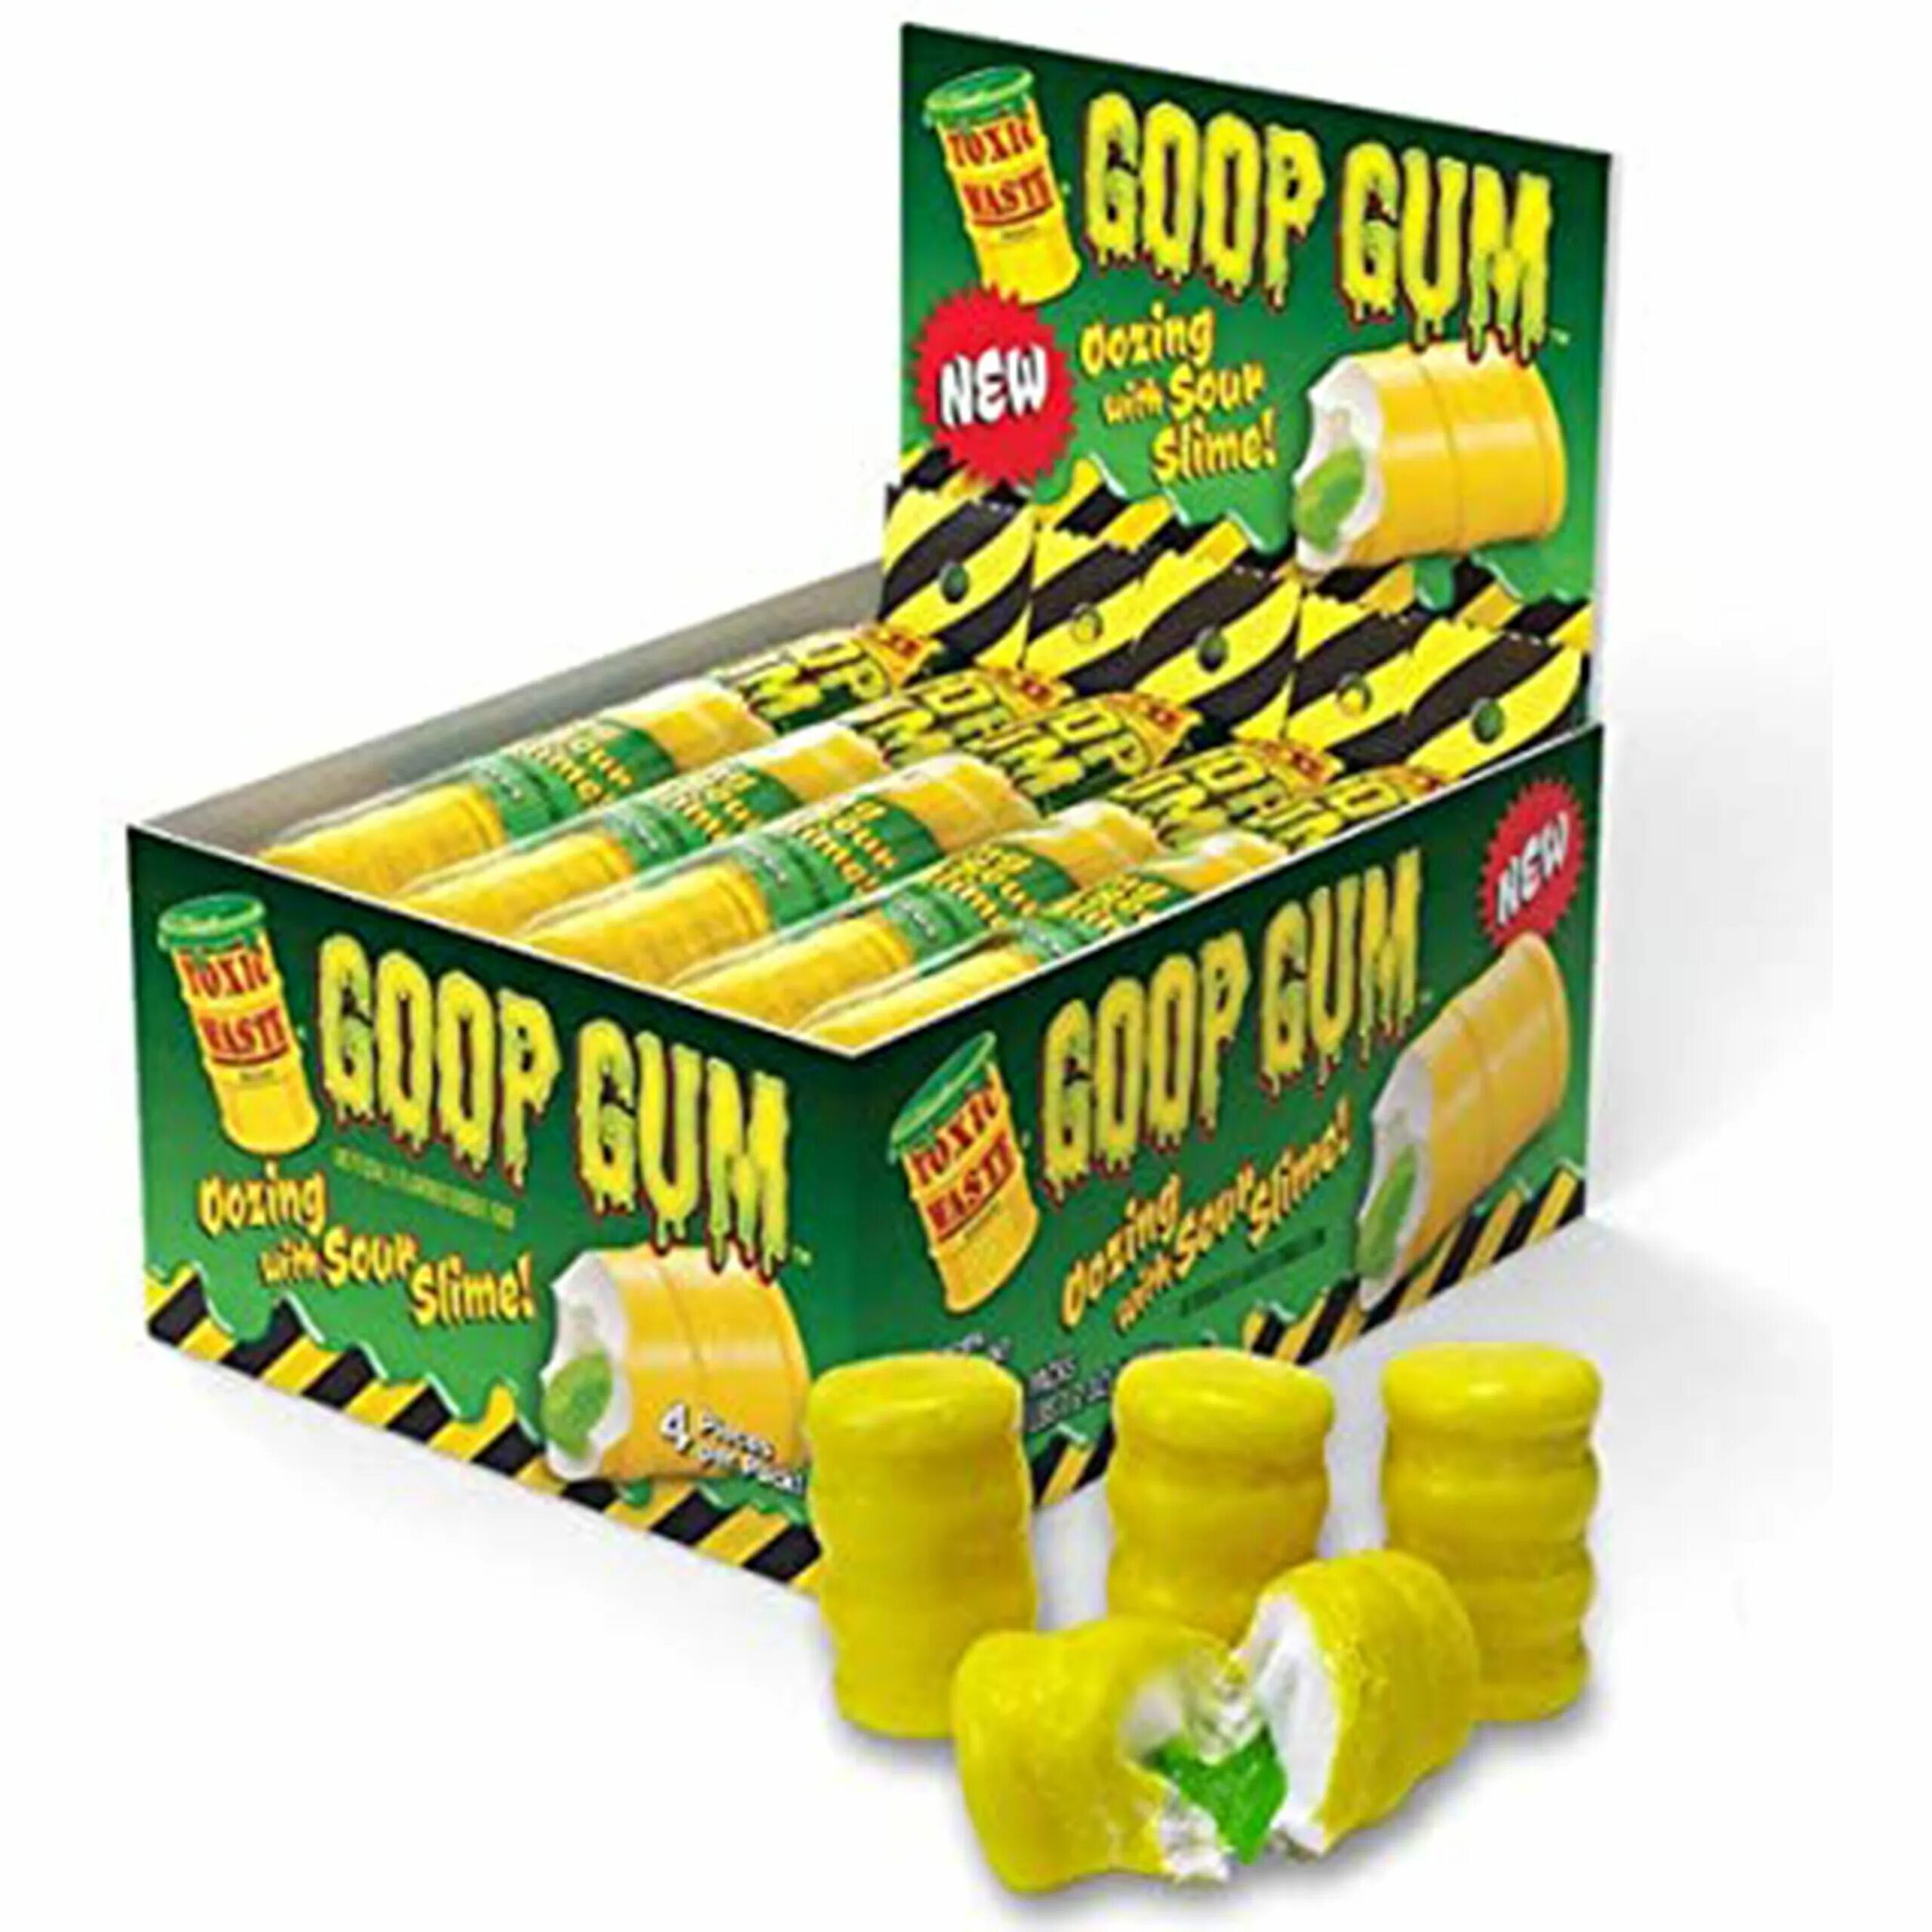 Кислая жвачка. Toxic waste жевательная конфета. Toxic waste Goop Gum 43,5 гр (3 жвачки). Toxic waste Goop Gum. Кислые жевательные конфеты Токсик.